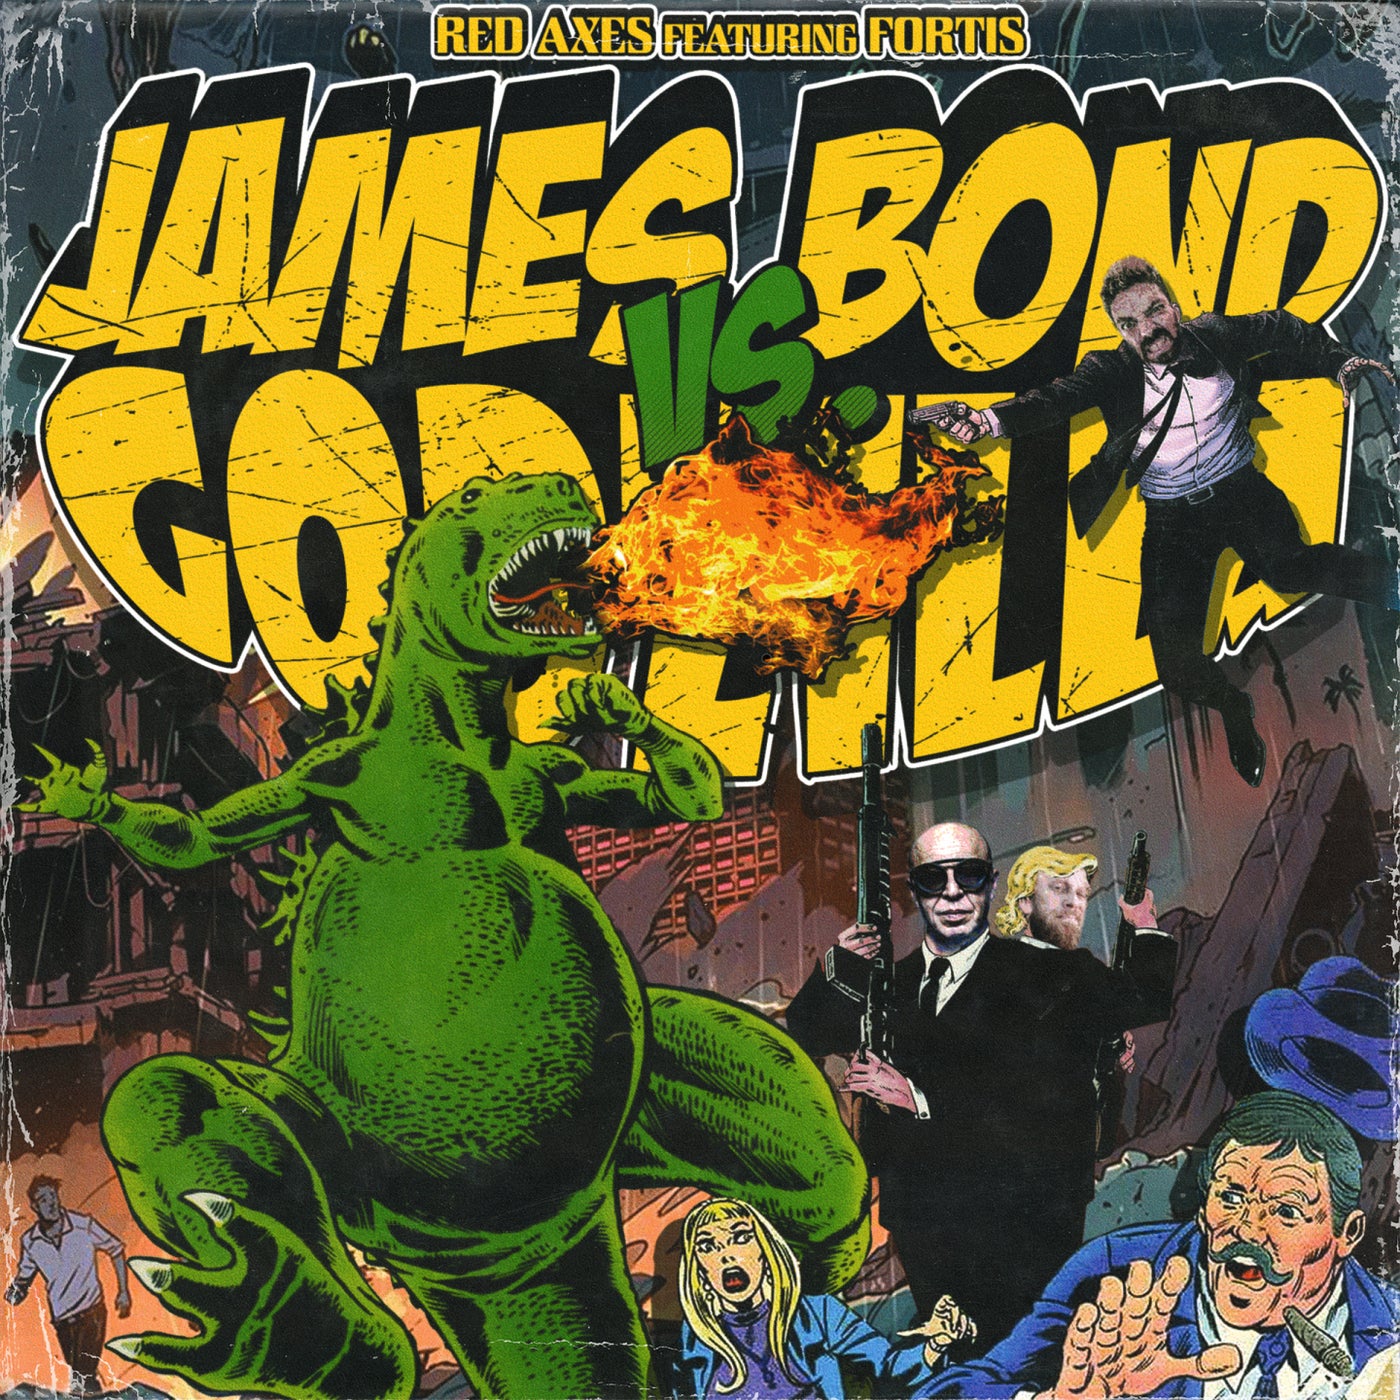 James Bond Vs. Godzilla (feat. Rami Fortis)